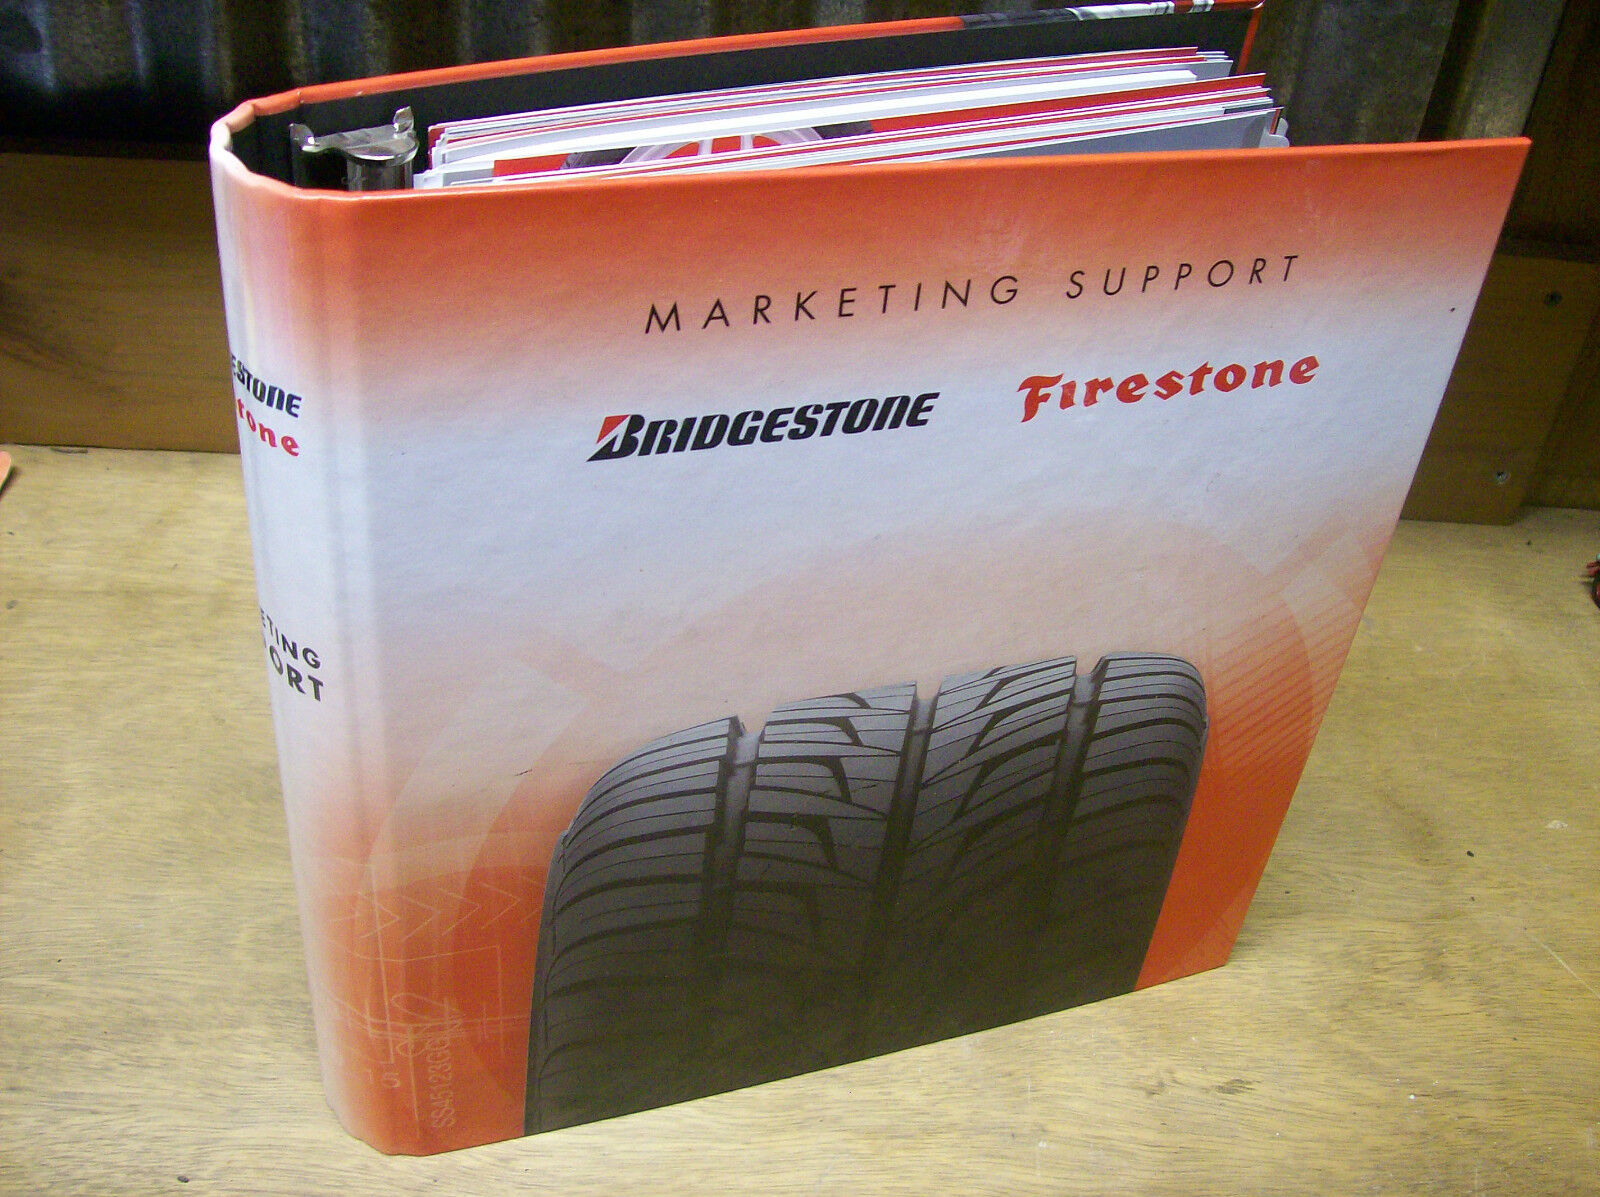 2009 Bridgestone / Firestone Marketing Support Manual